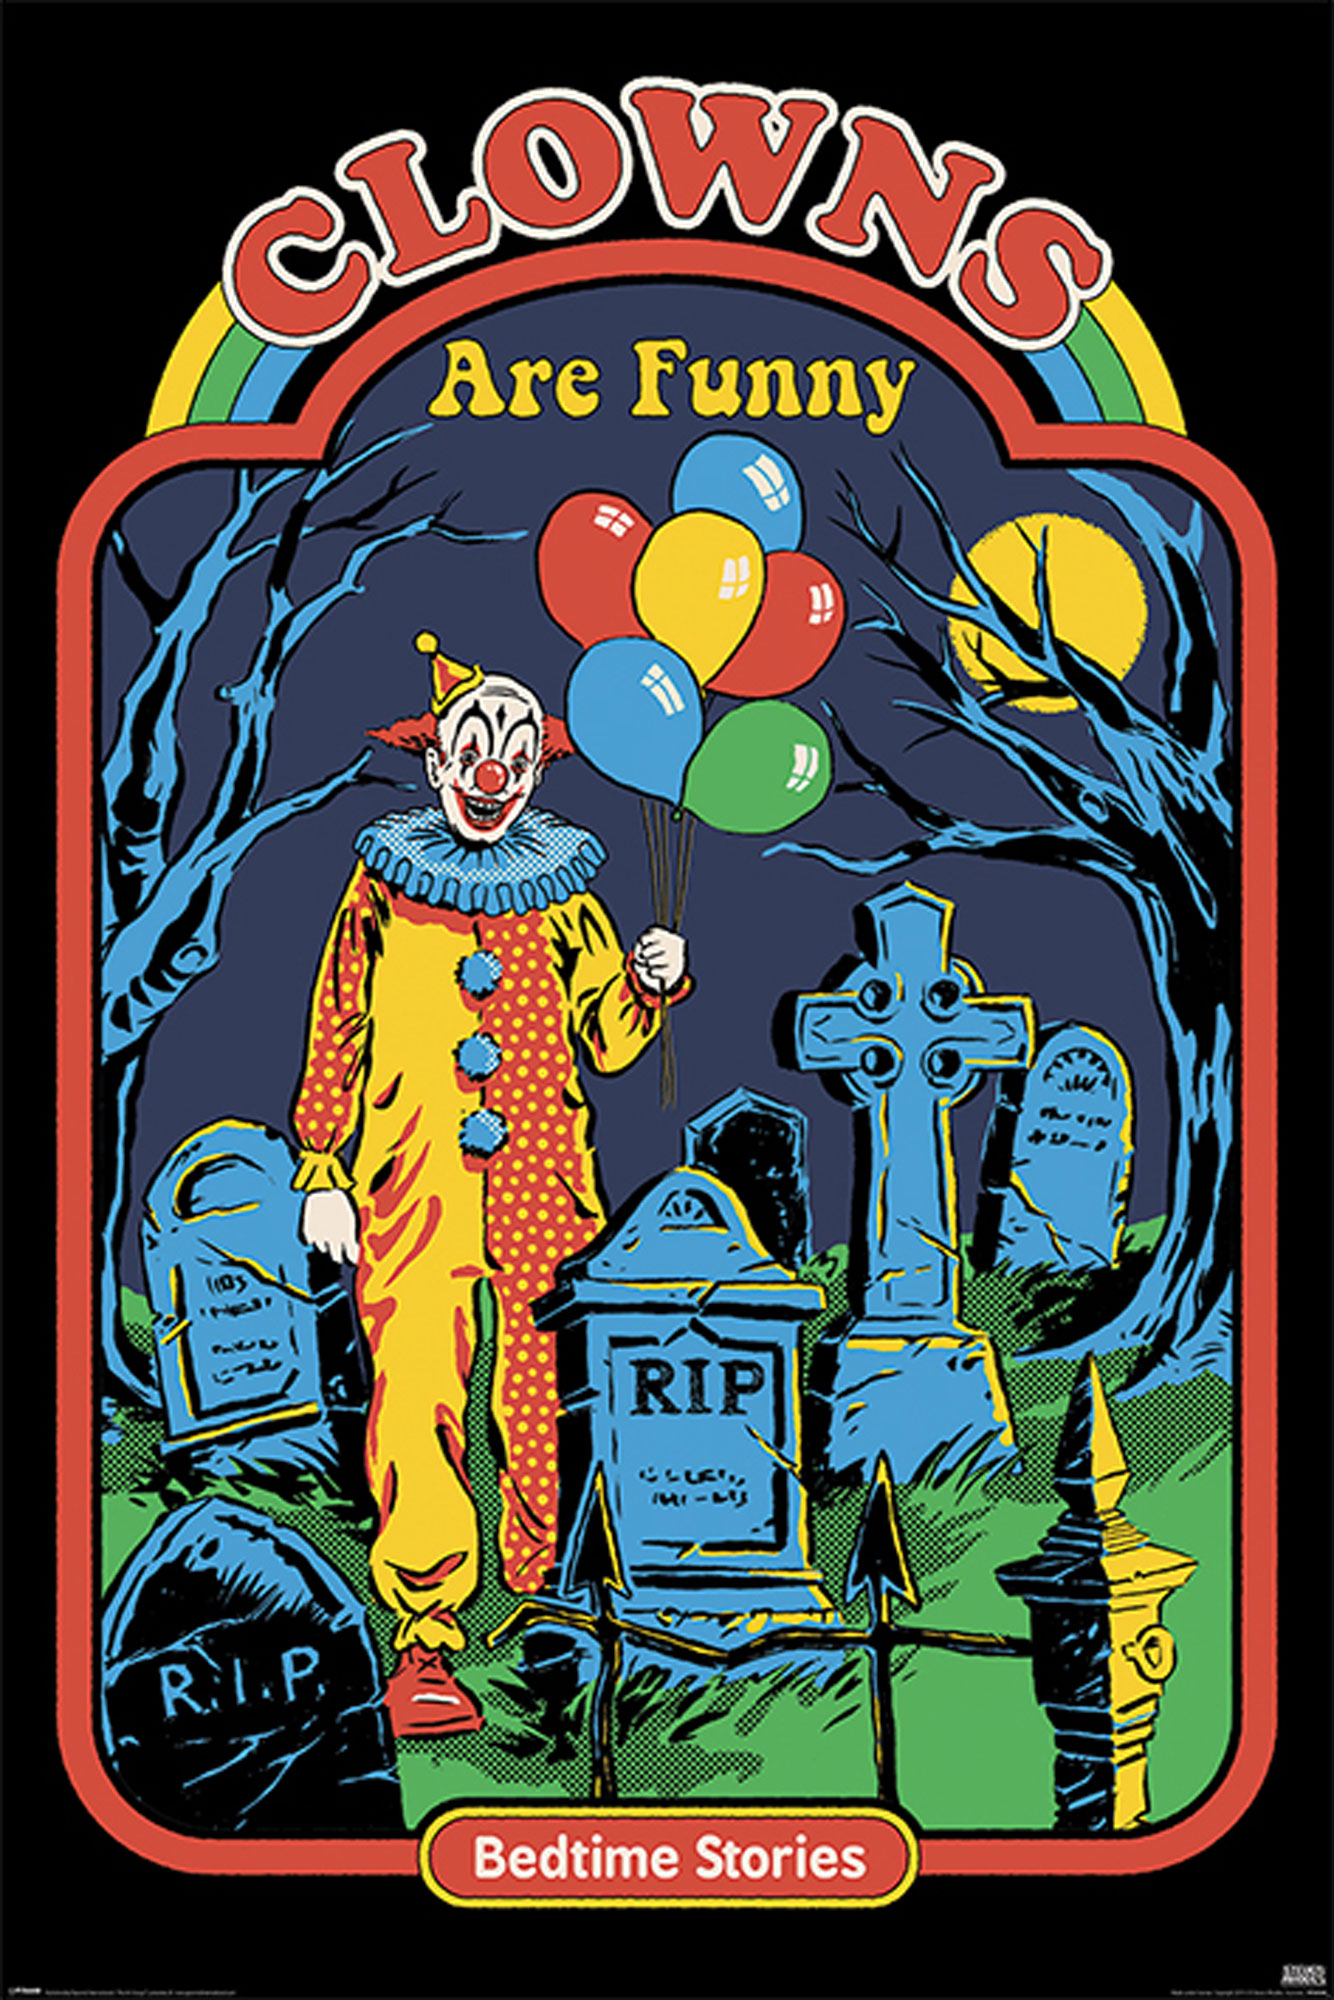 Steven Rhodes - Clowns are Funny